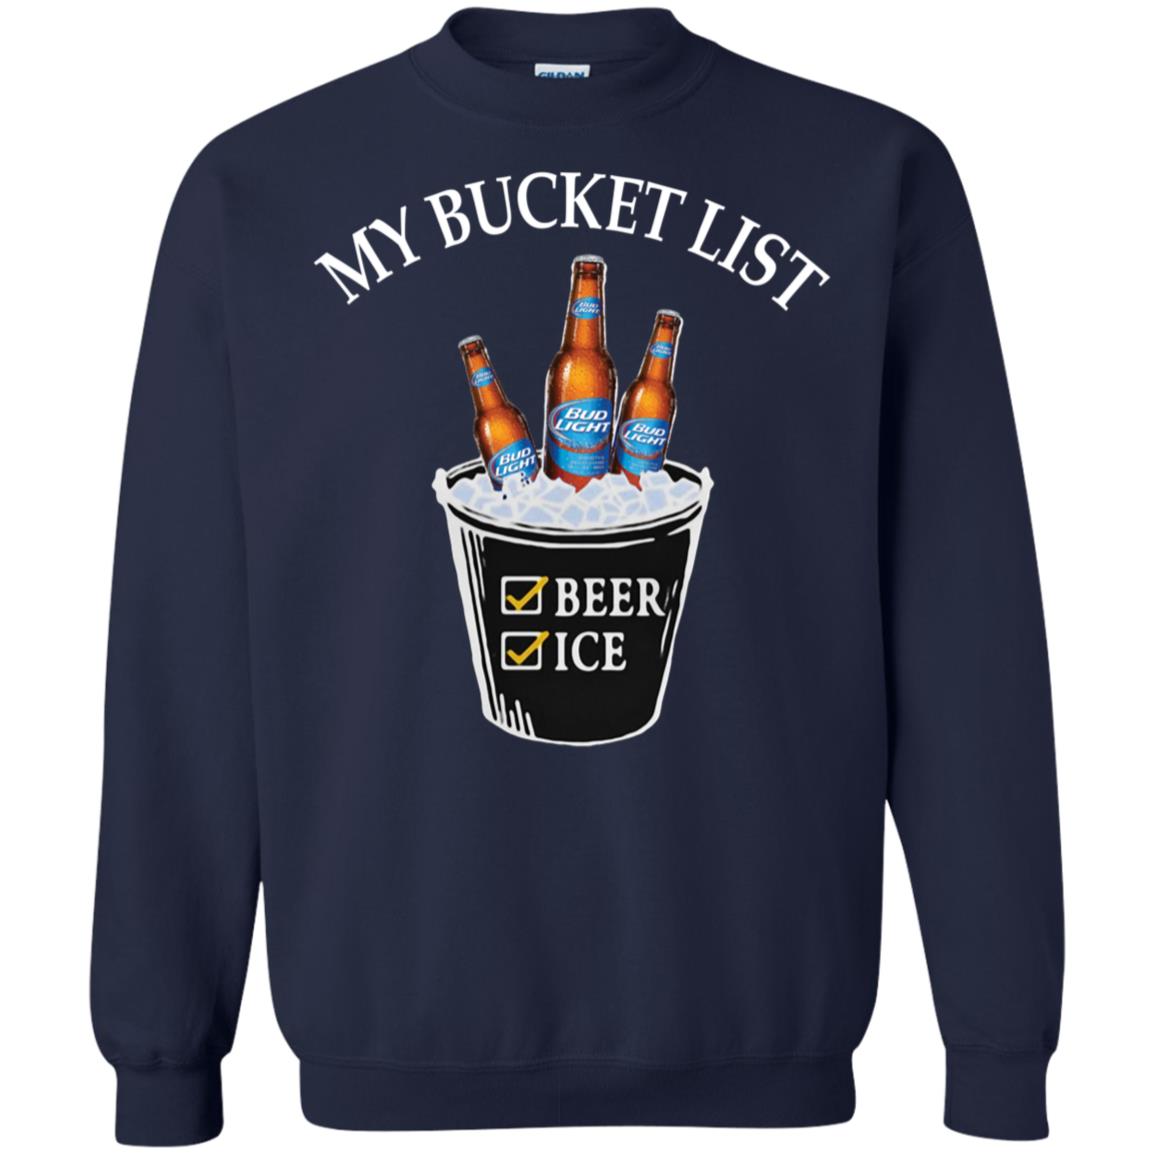 My Bucket List Bud Light Beer Ice Christmas Shirts